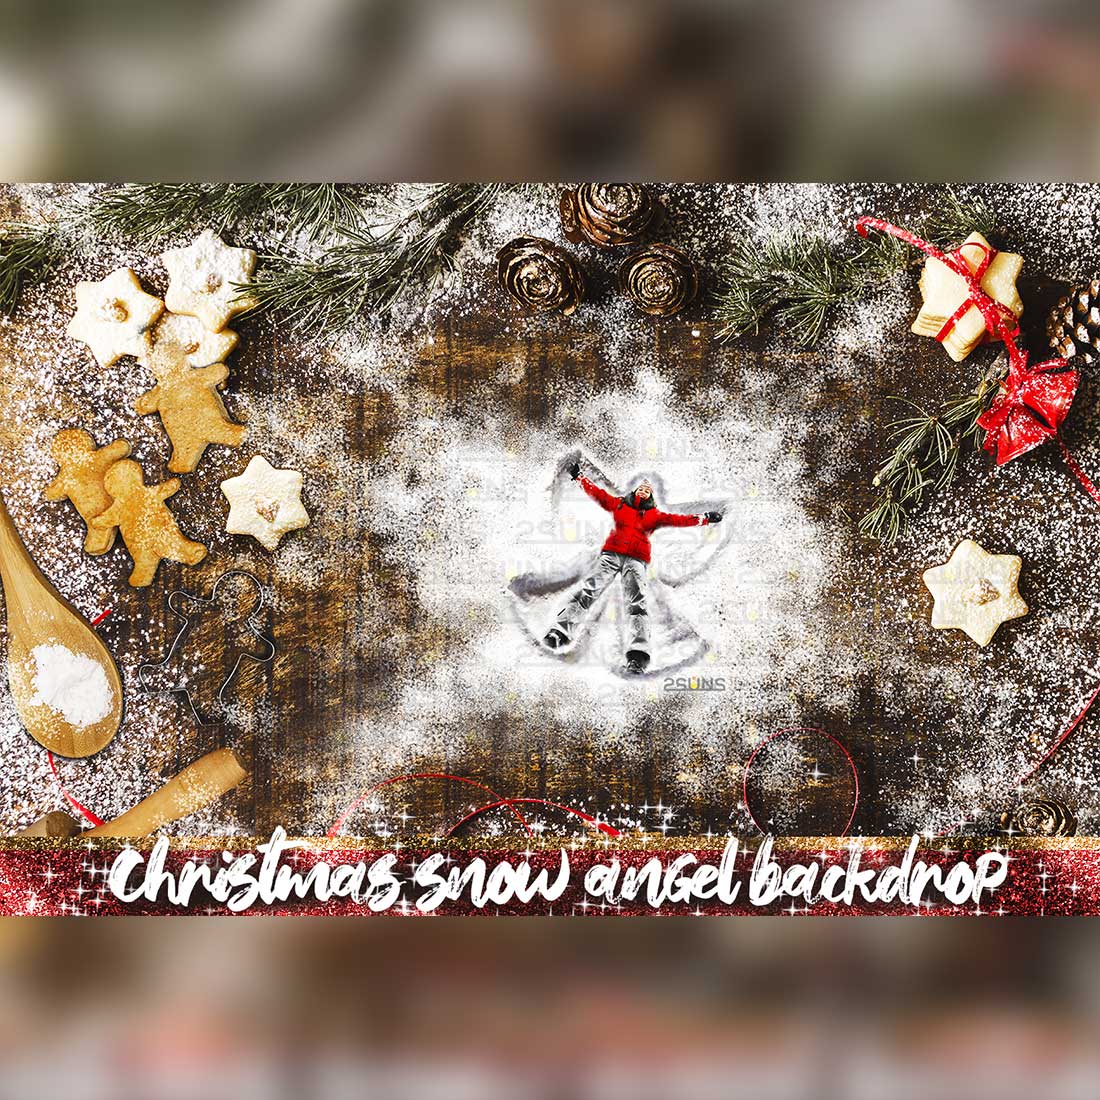 Gingerbread Christmas Digital Backdrop Overlays Cover Image.